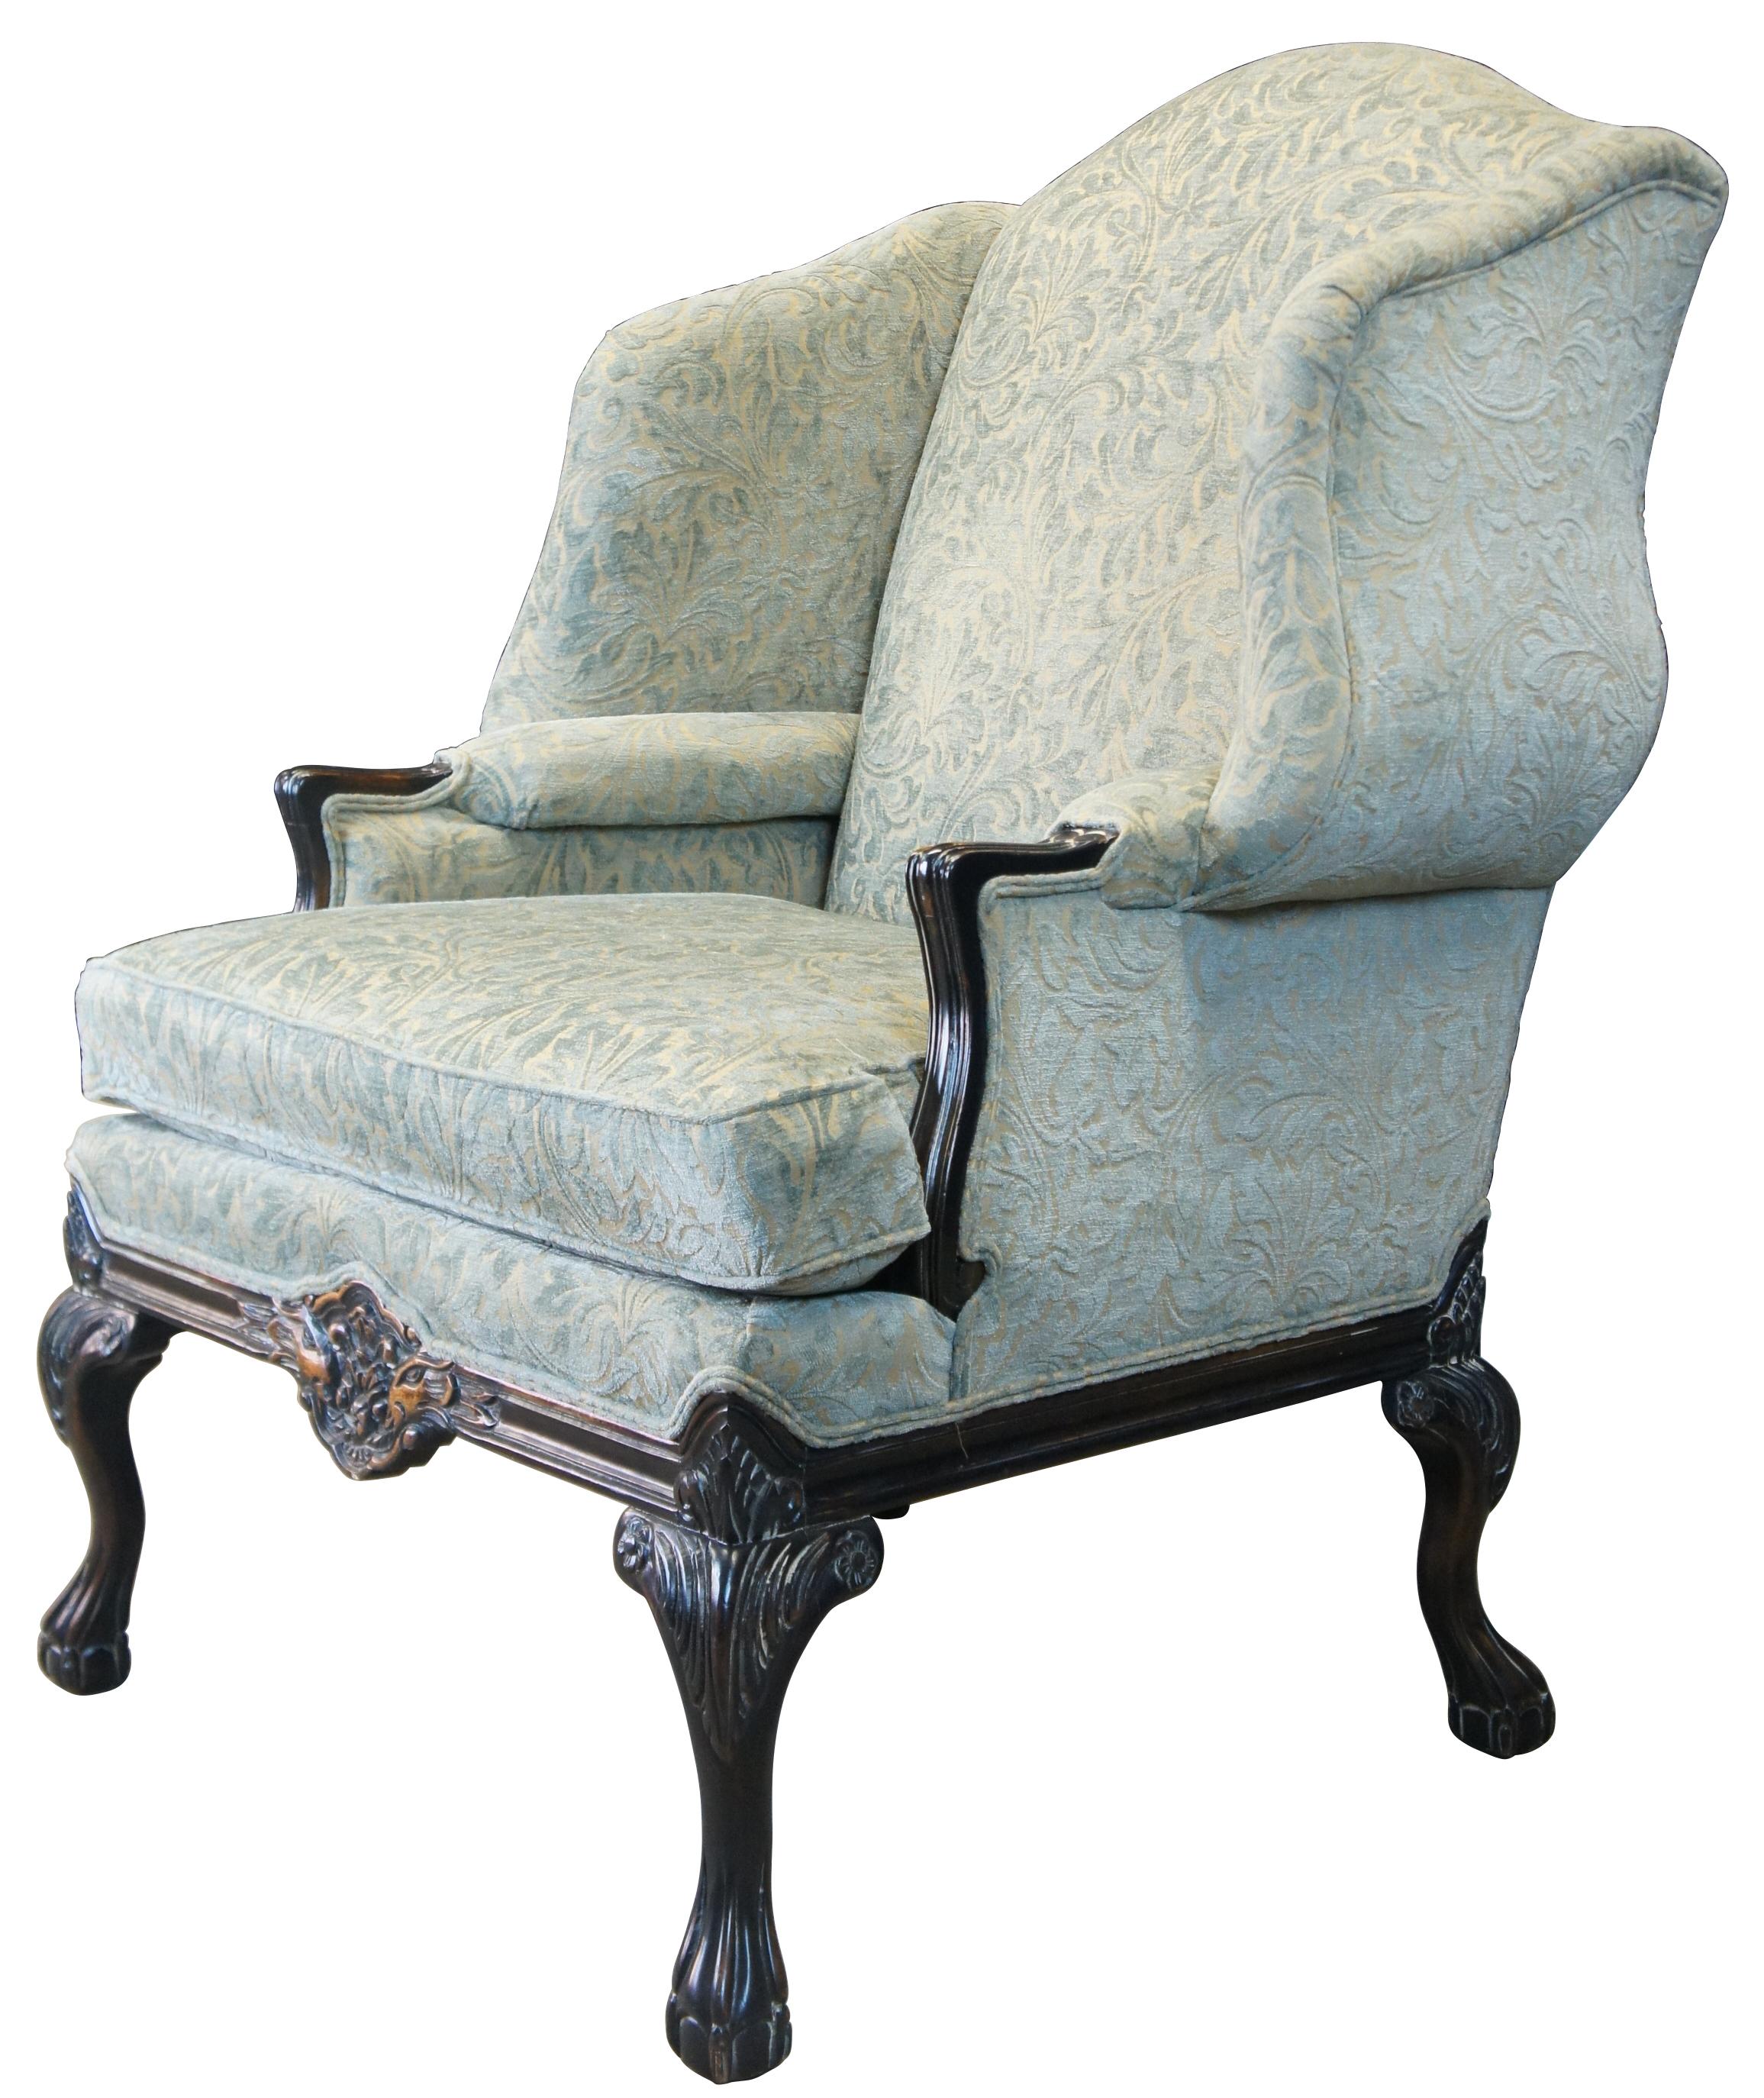 woodmark originals wingback chair